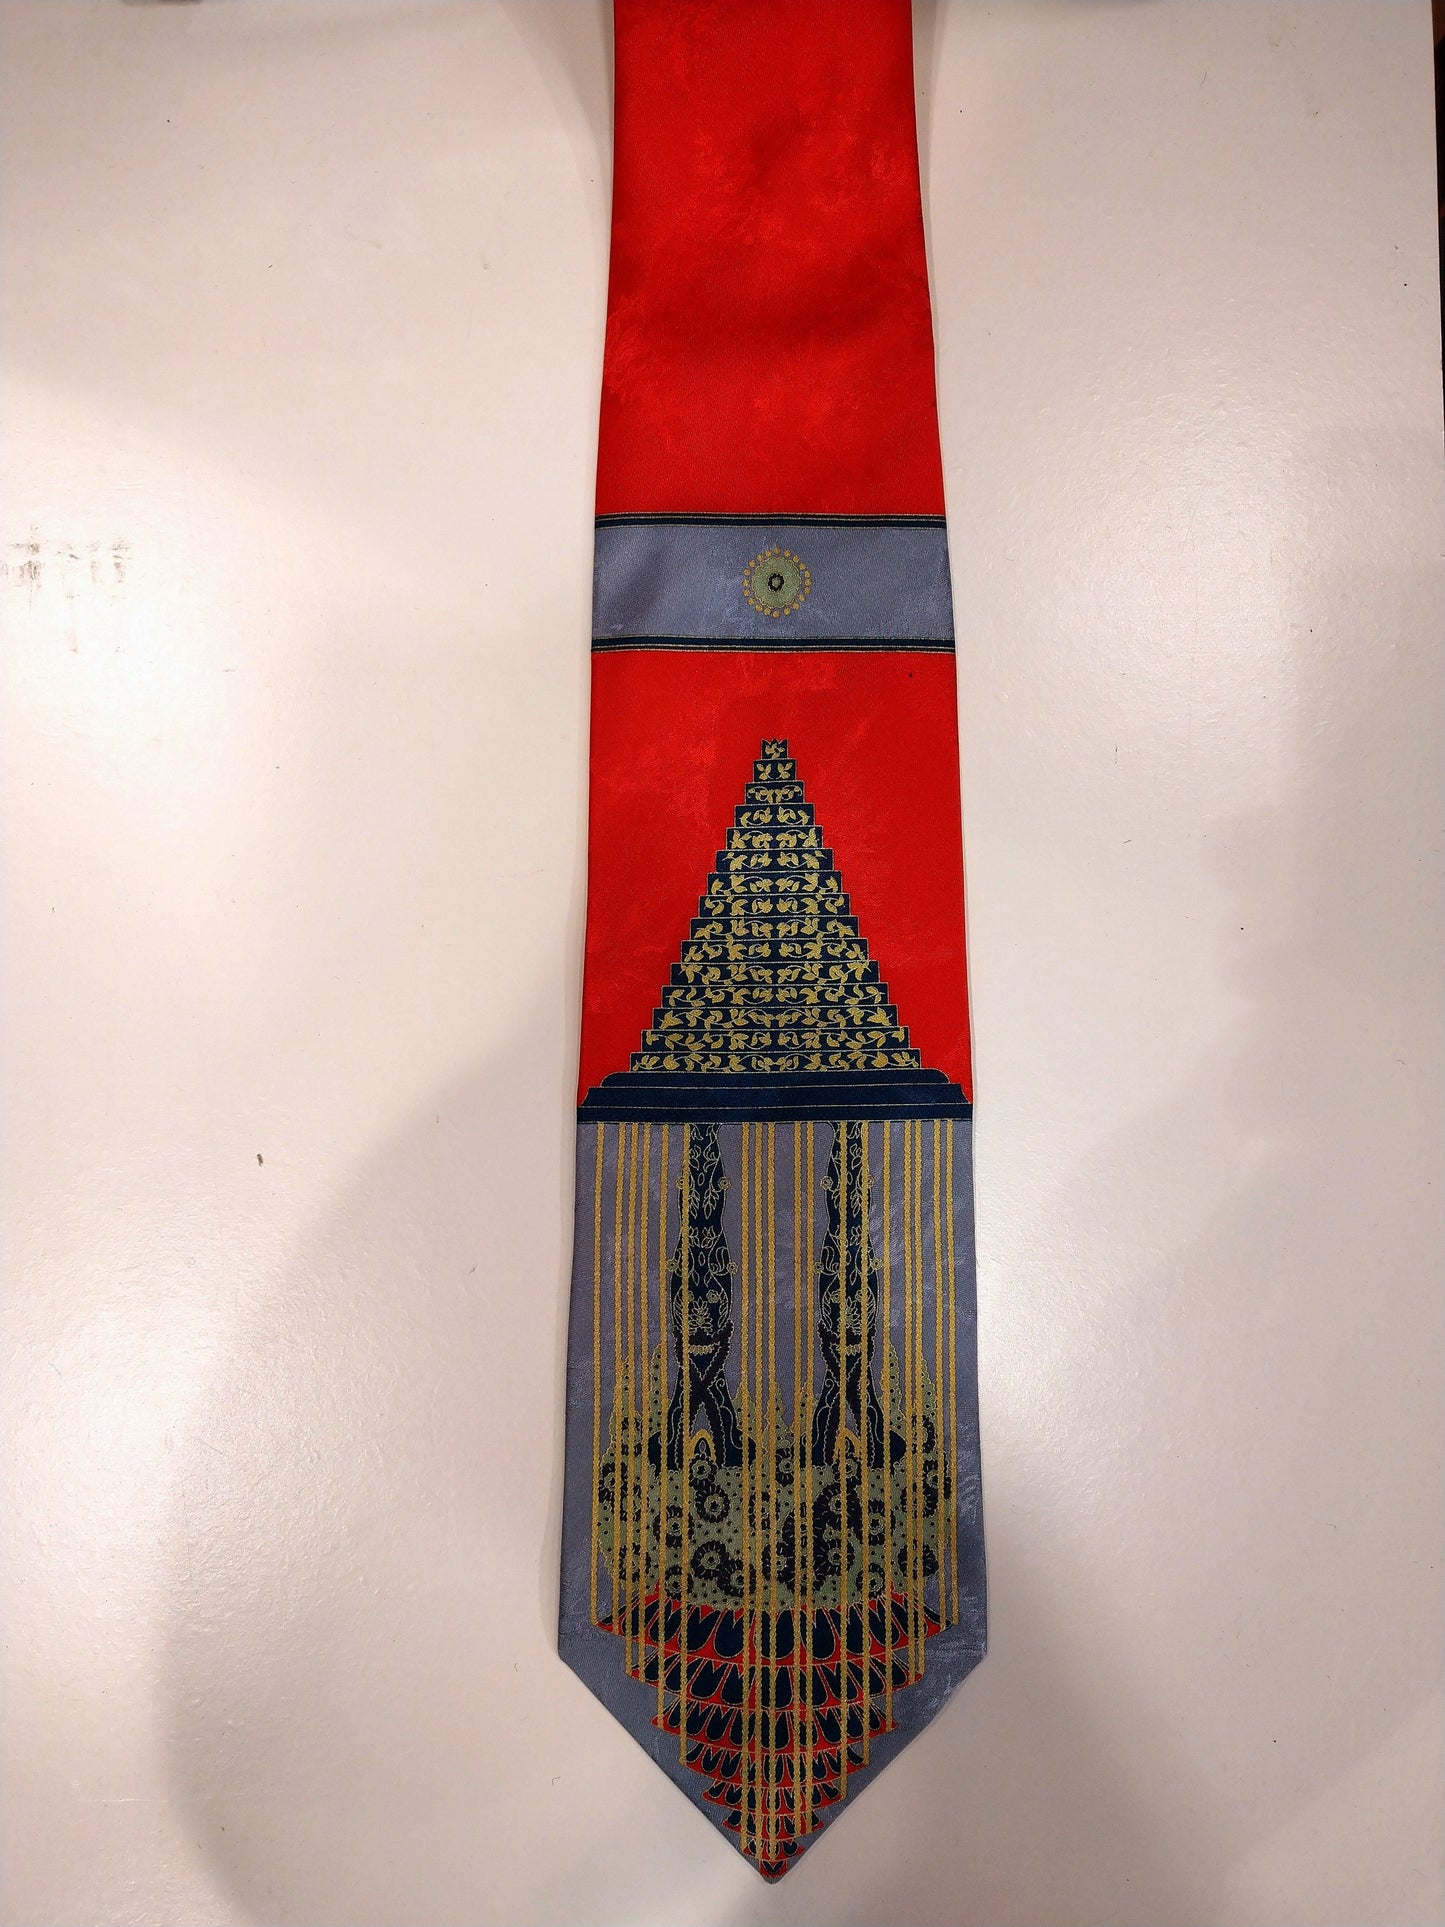 Vintage Anne Surkamp Kramer silk tie. Nice vintage motif.